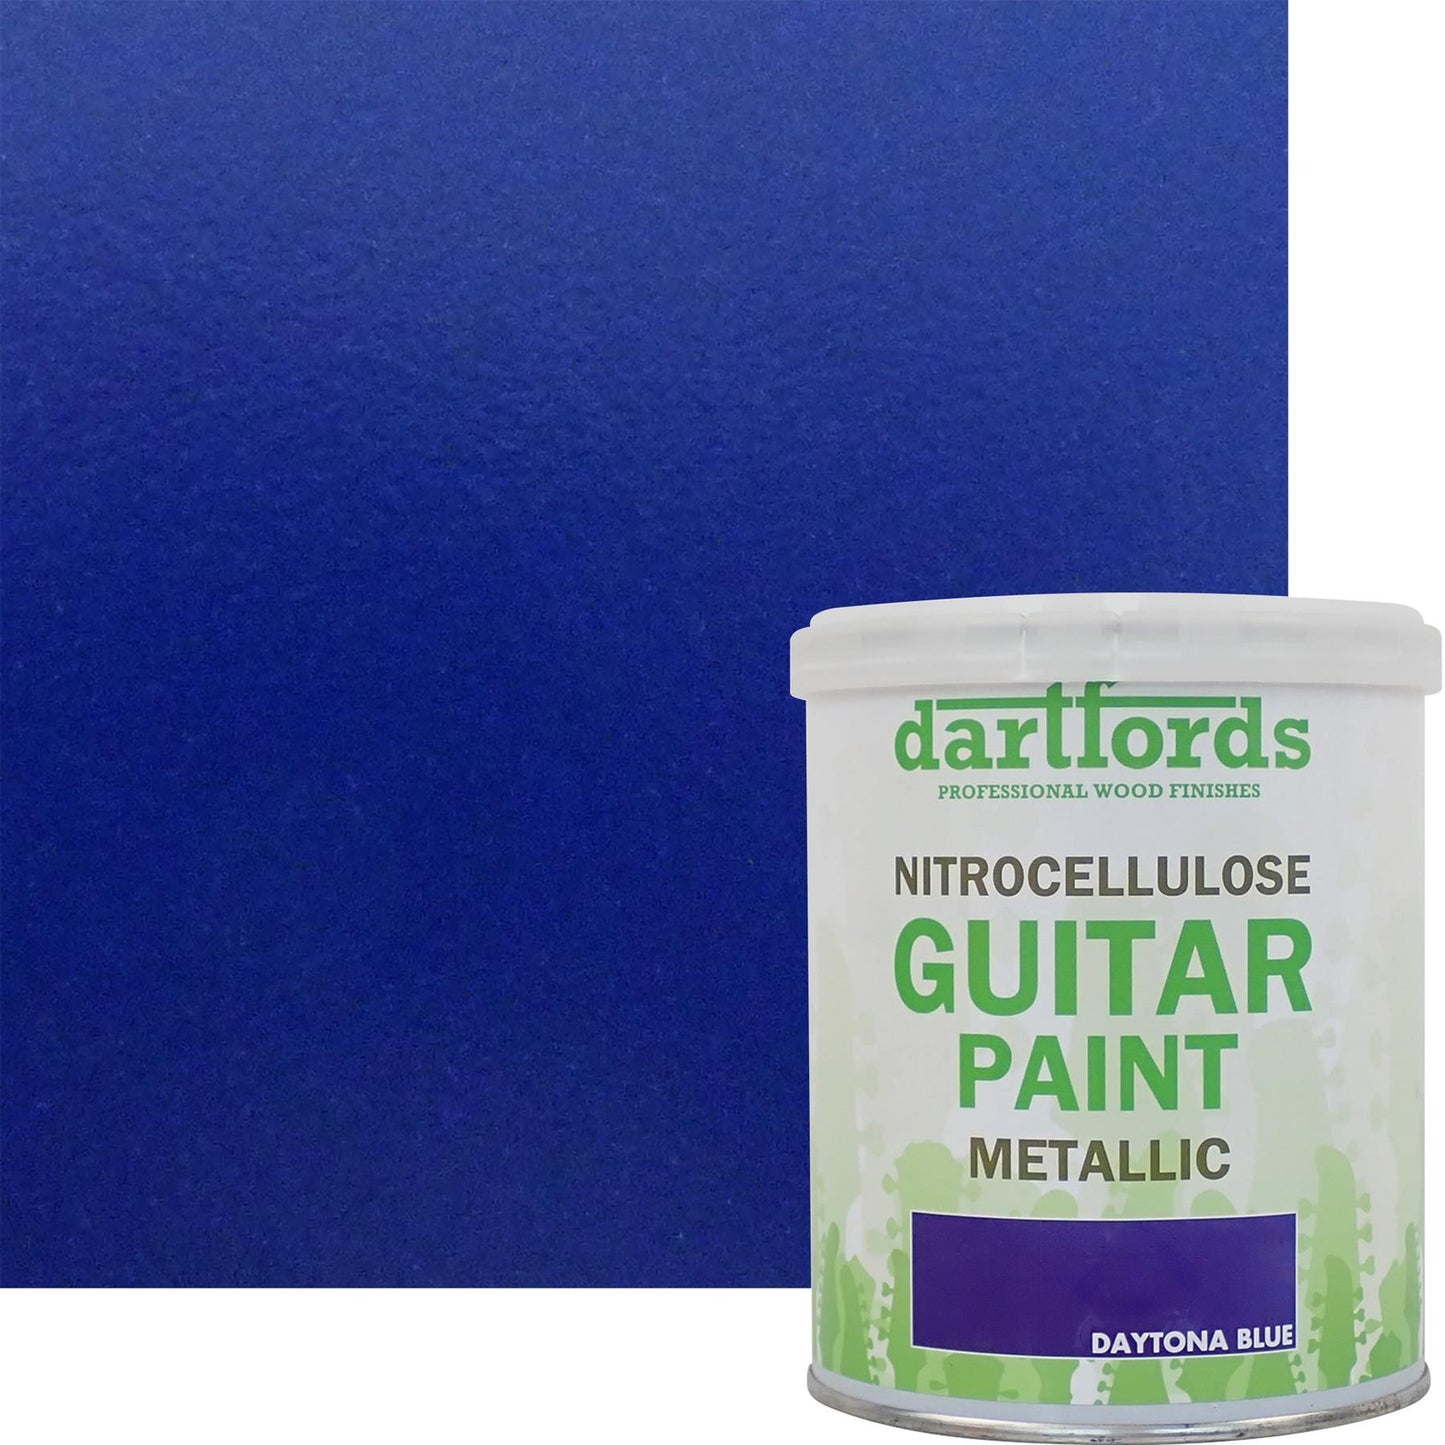 dartfords Daytona Blue Metallic Nitrocellulose Guitar Paint - 1 litre Tin